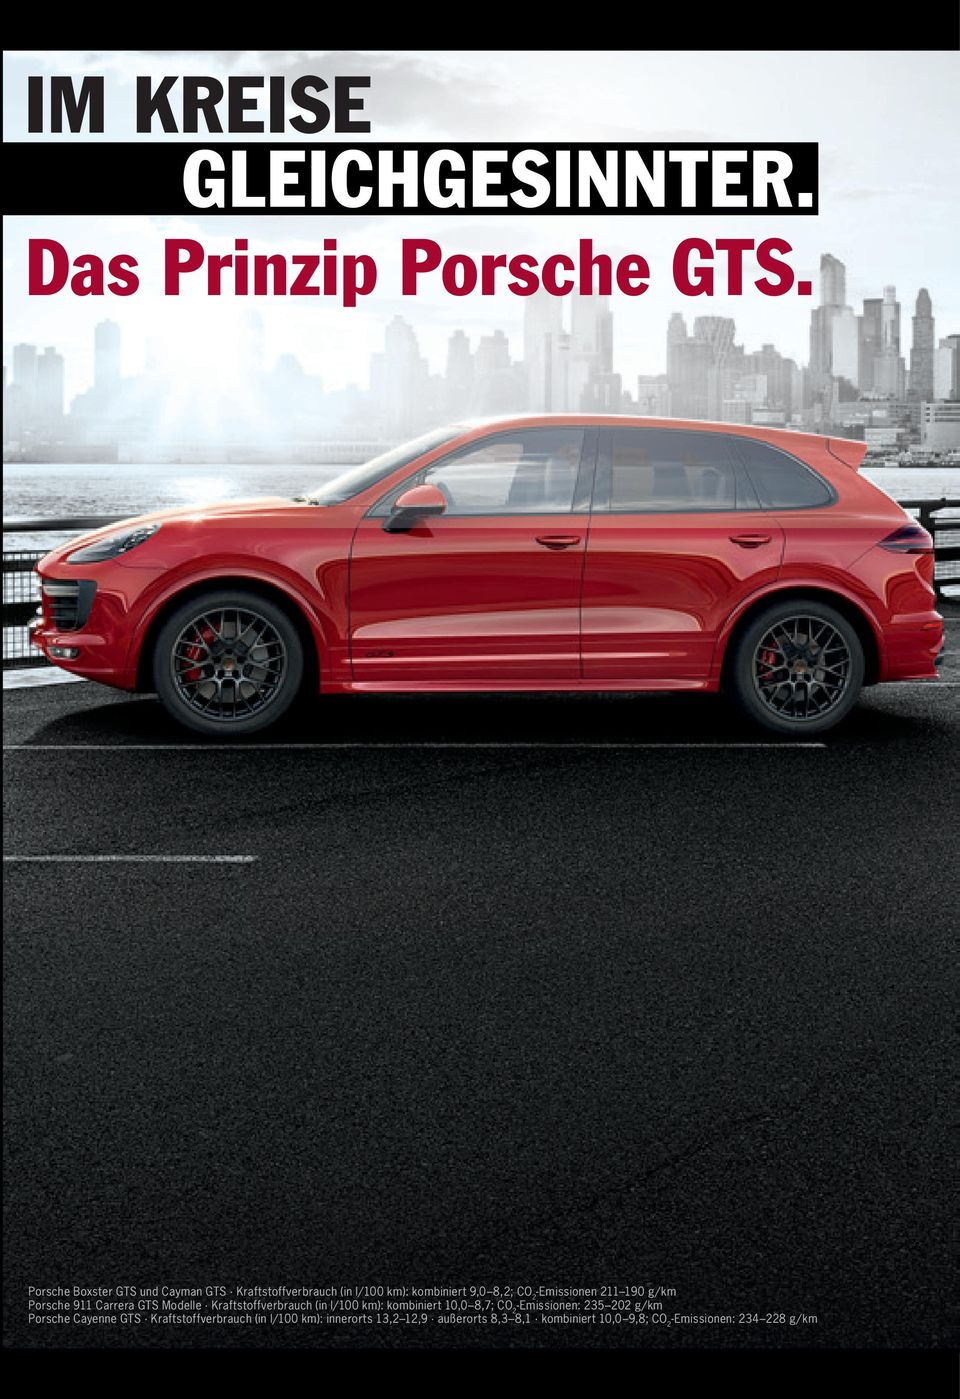 211 190 g/km Porsche 911 Carrera GTS Modelle Kraftstoffverbrauch (in l/100 km): kombiniert 10,0 8,7; CO 2